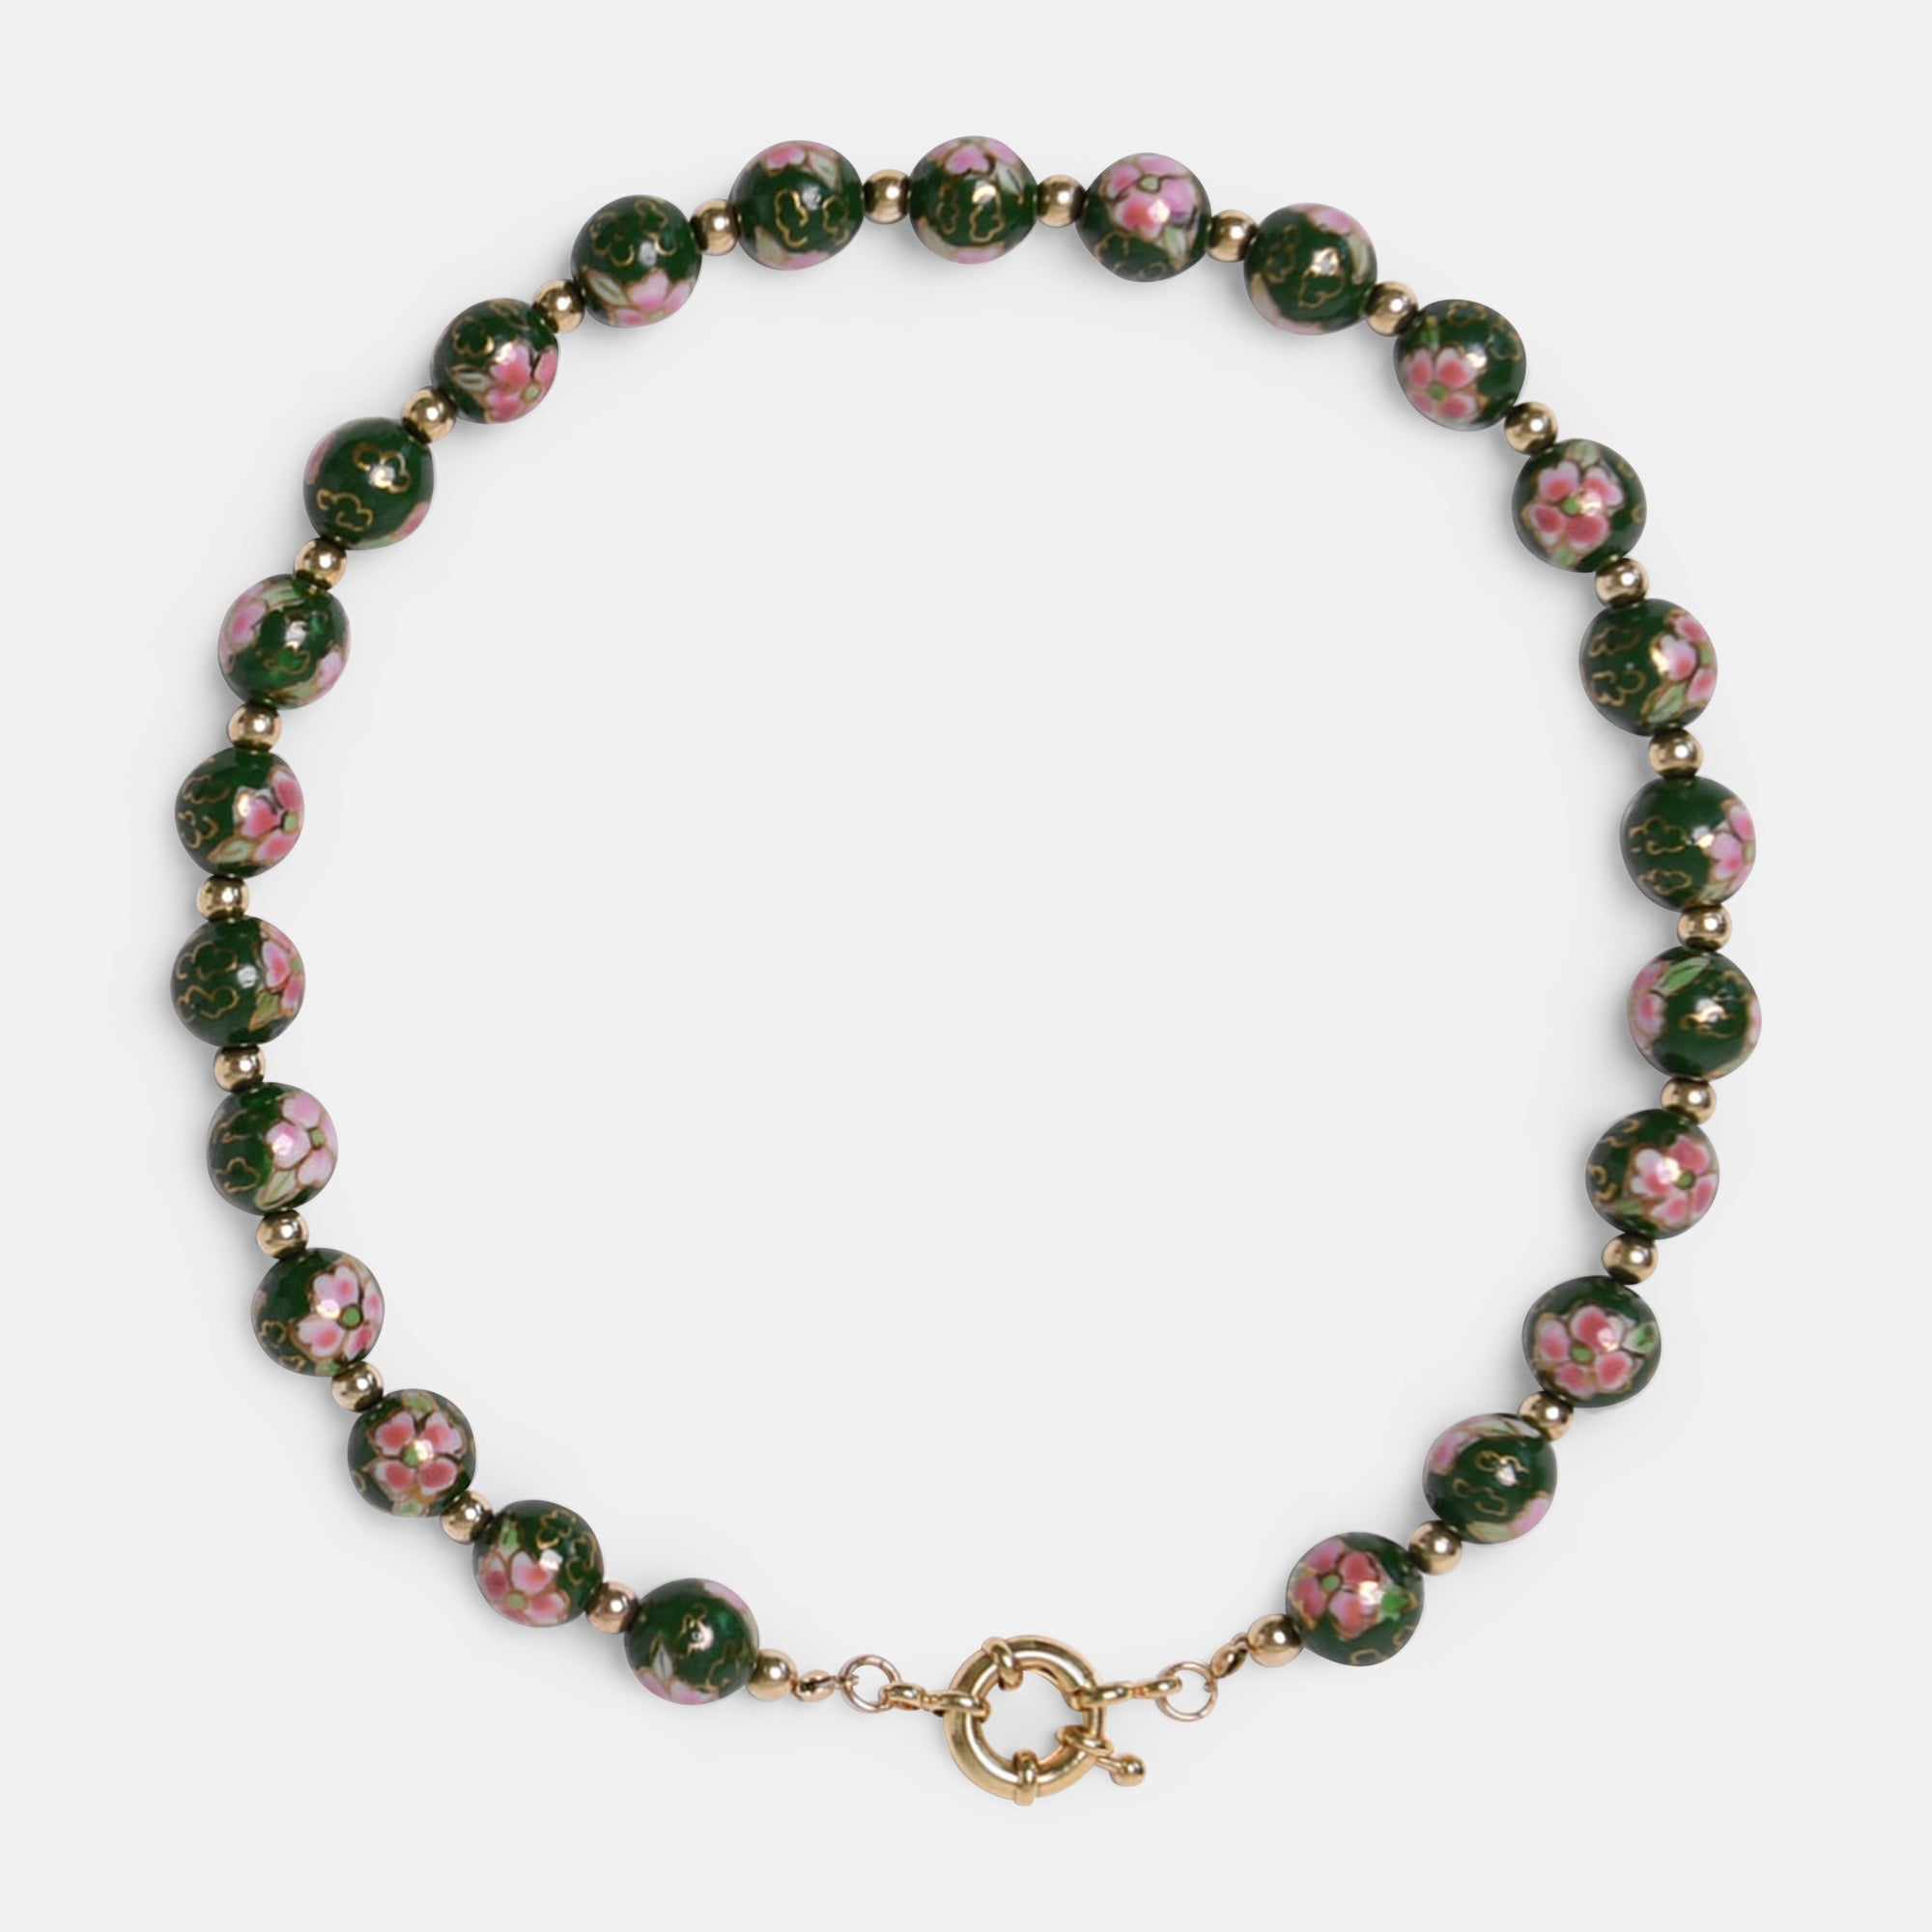 The La Flor Doce: The Grande Necklace